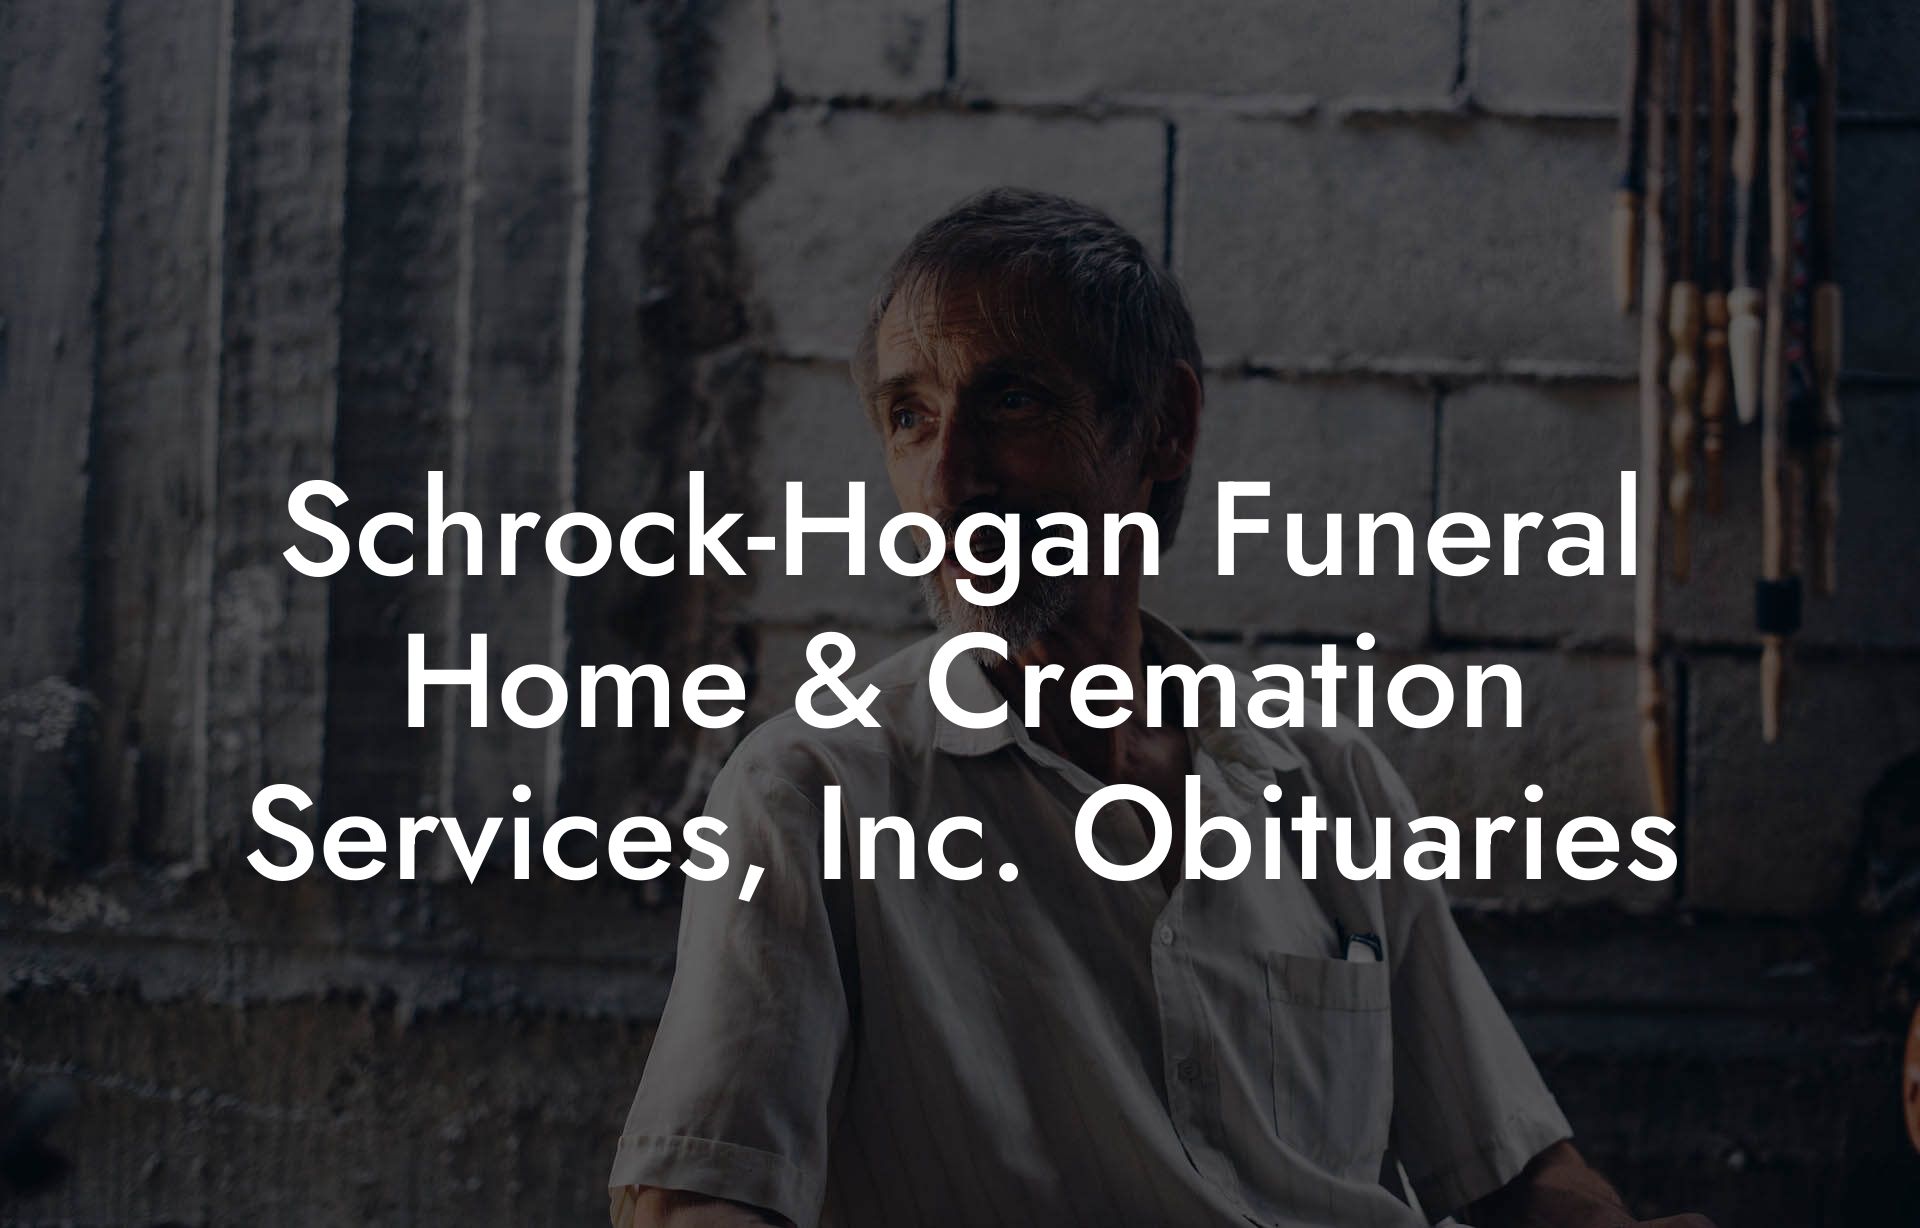 Schrock-Hogan Funeral Home & Cremation Services, Inc. Obituaries